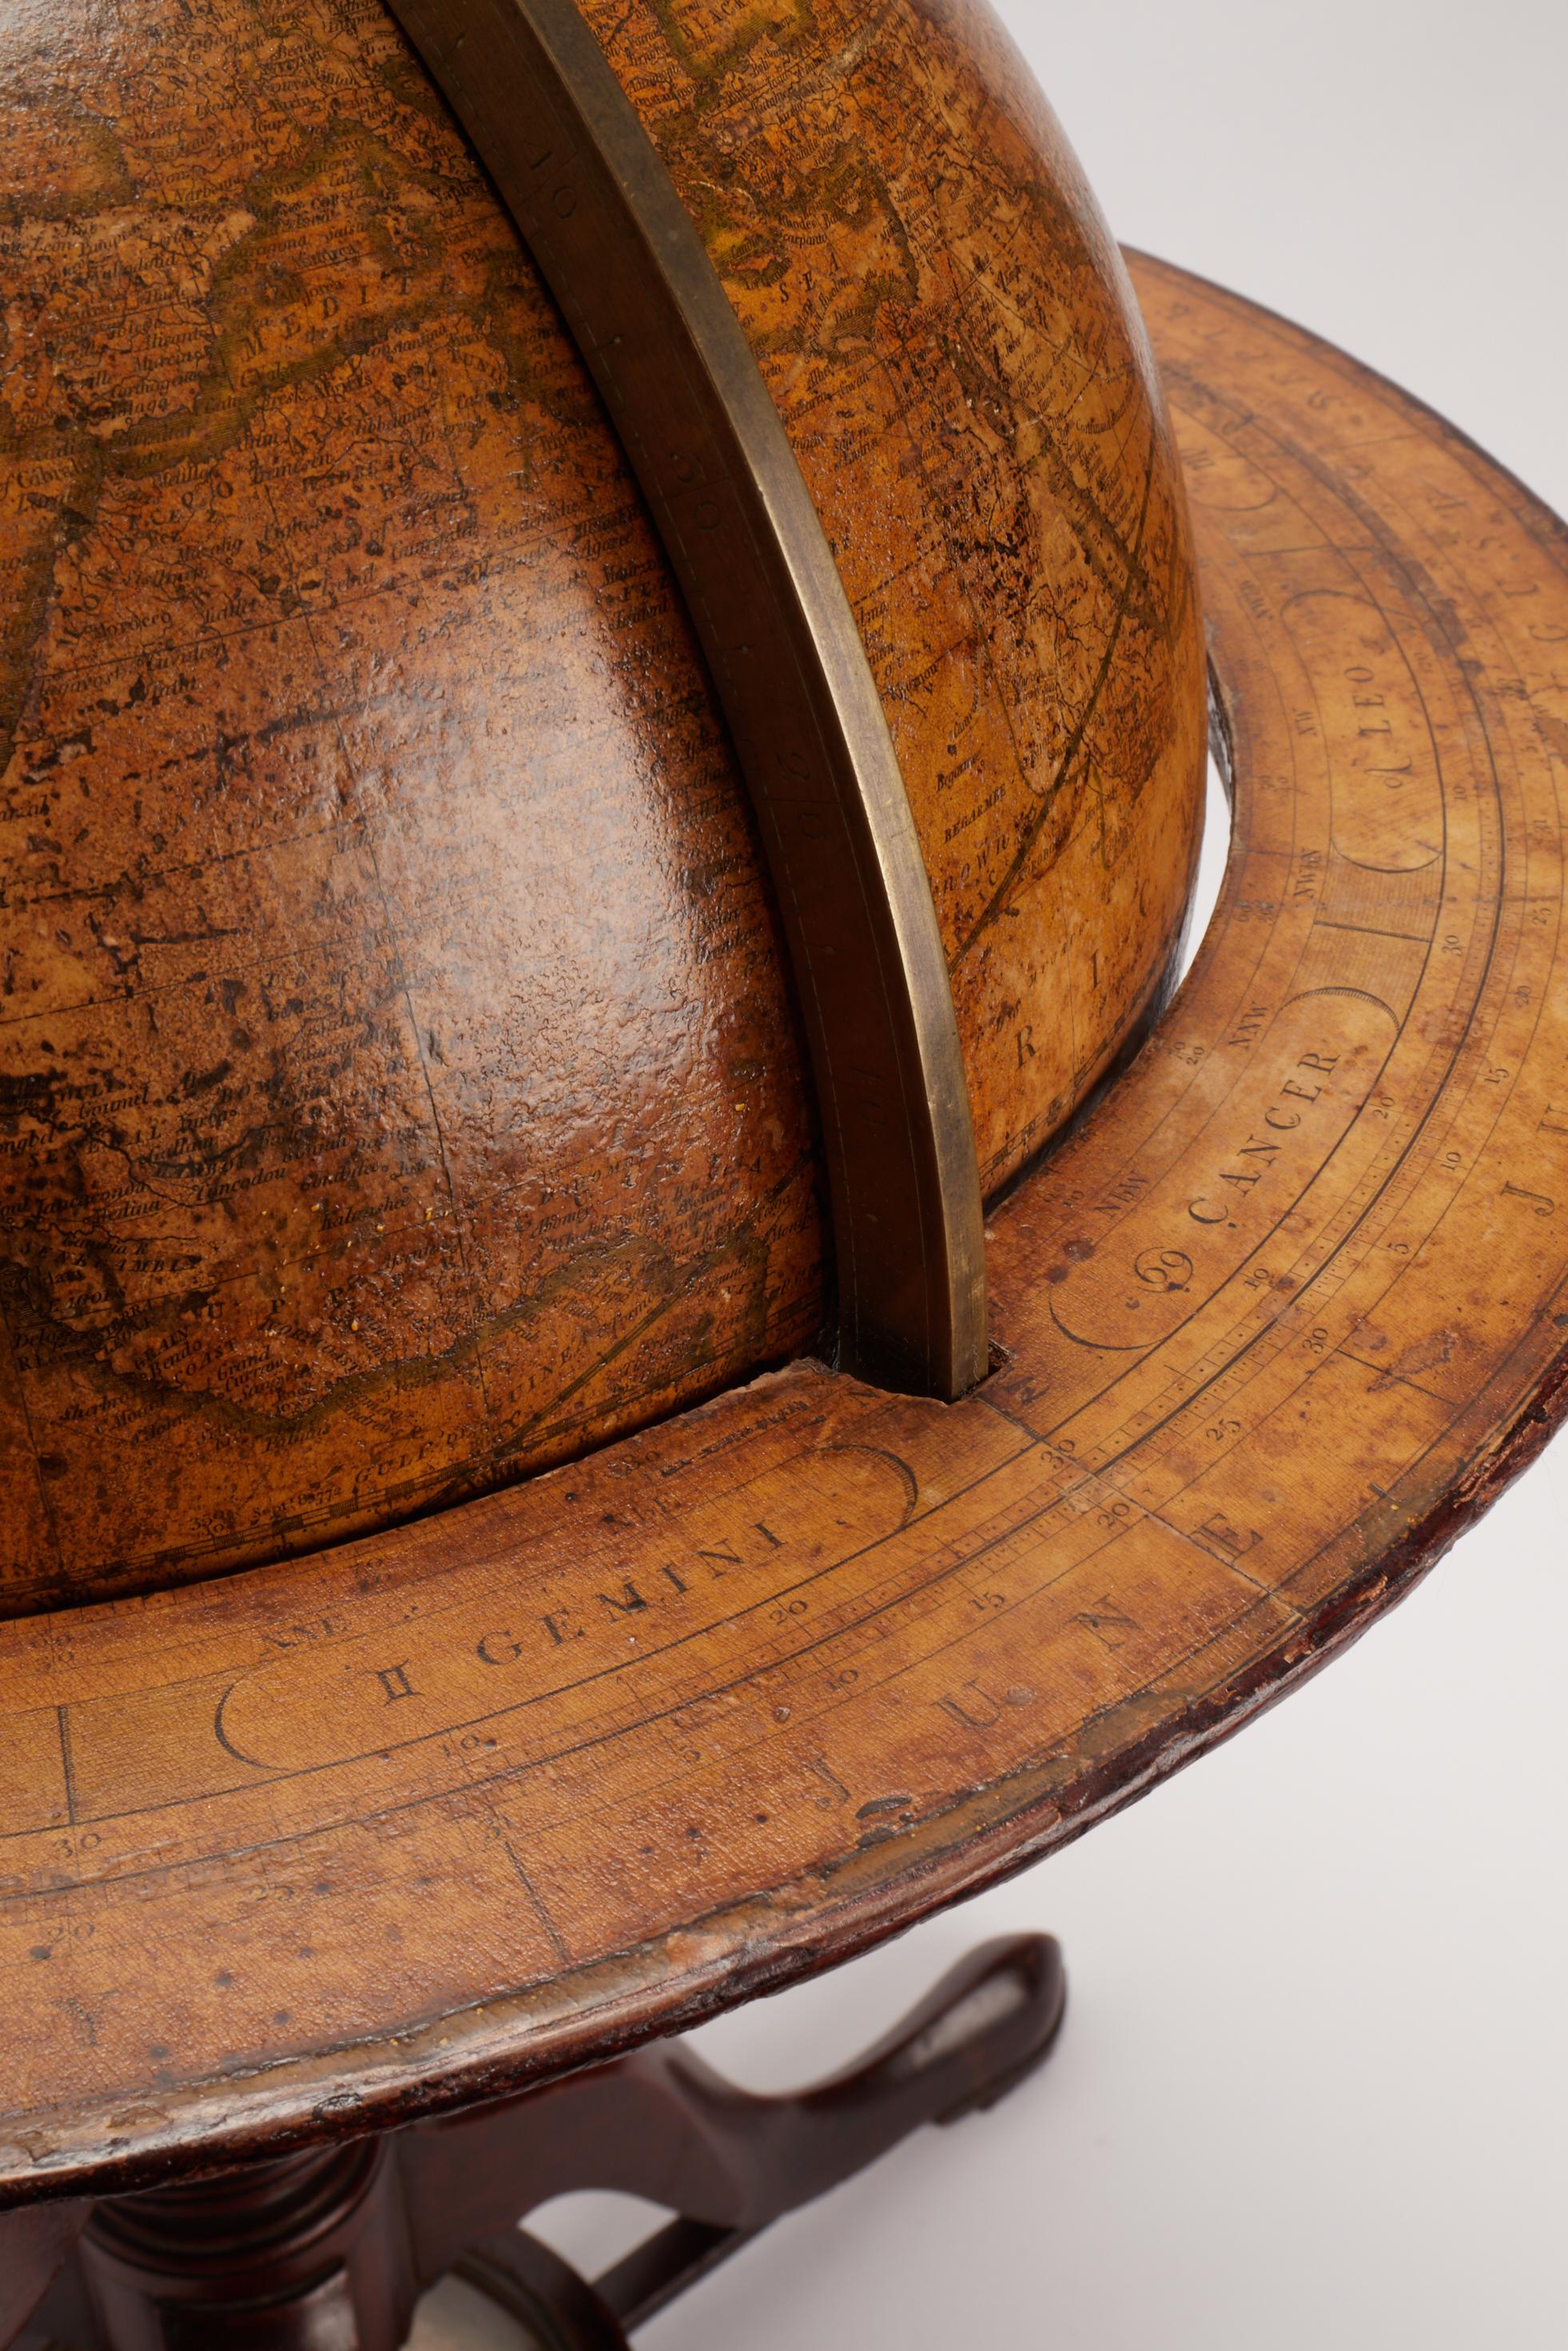 British Terrestrial Globe Signed Cary, London, 1798